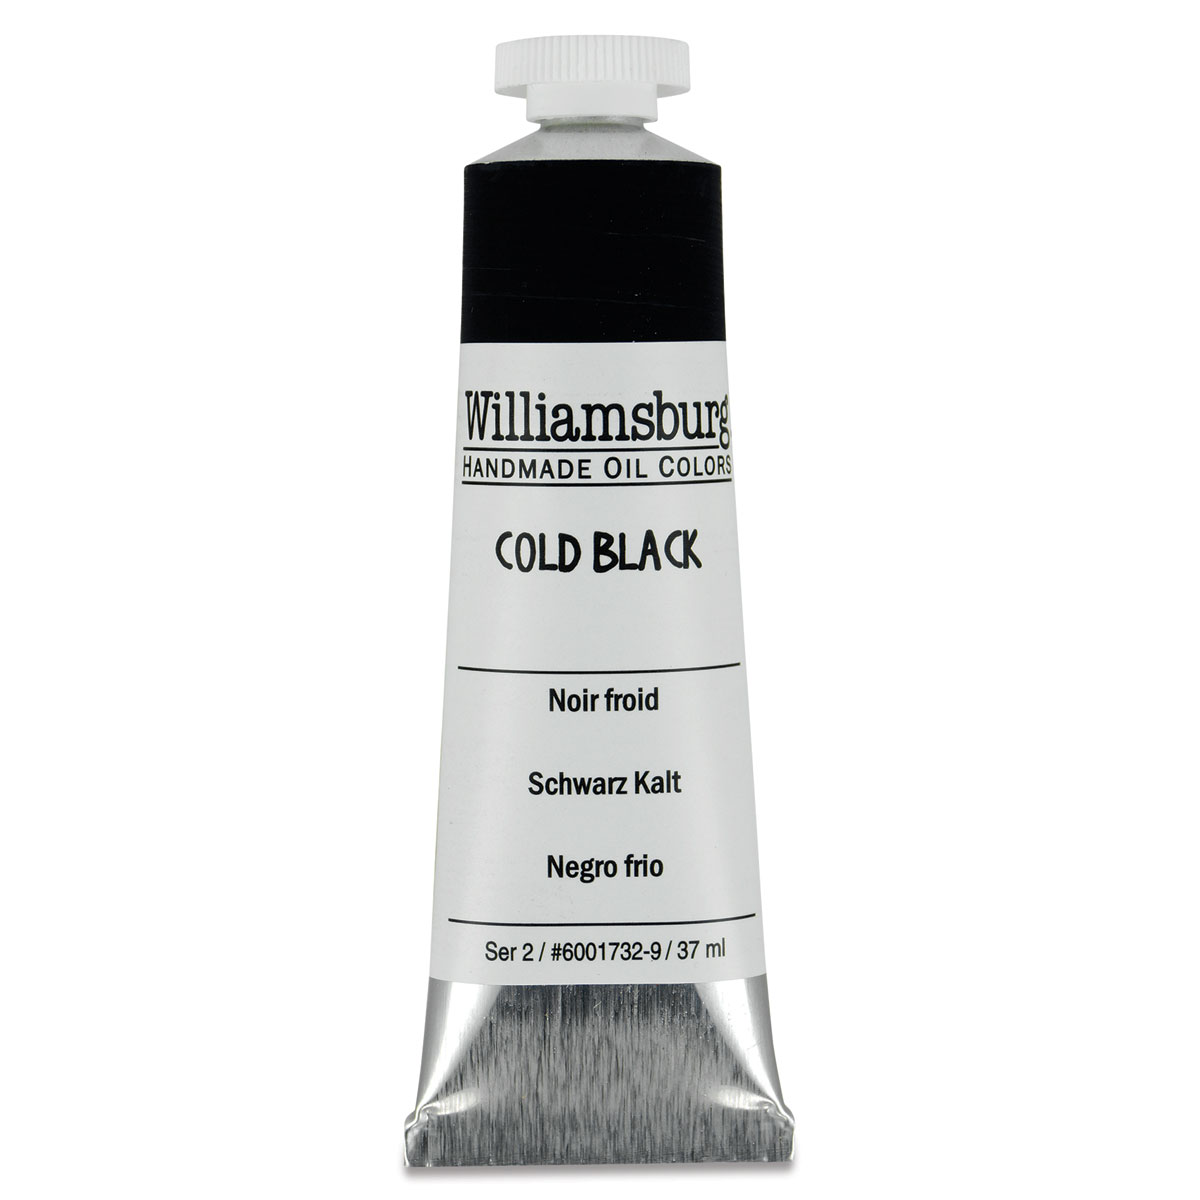 Williamsburg Handmade Oil Paint - Cold Black, 37 ml tube